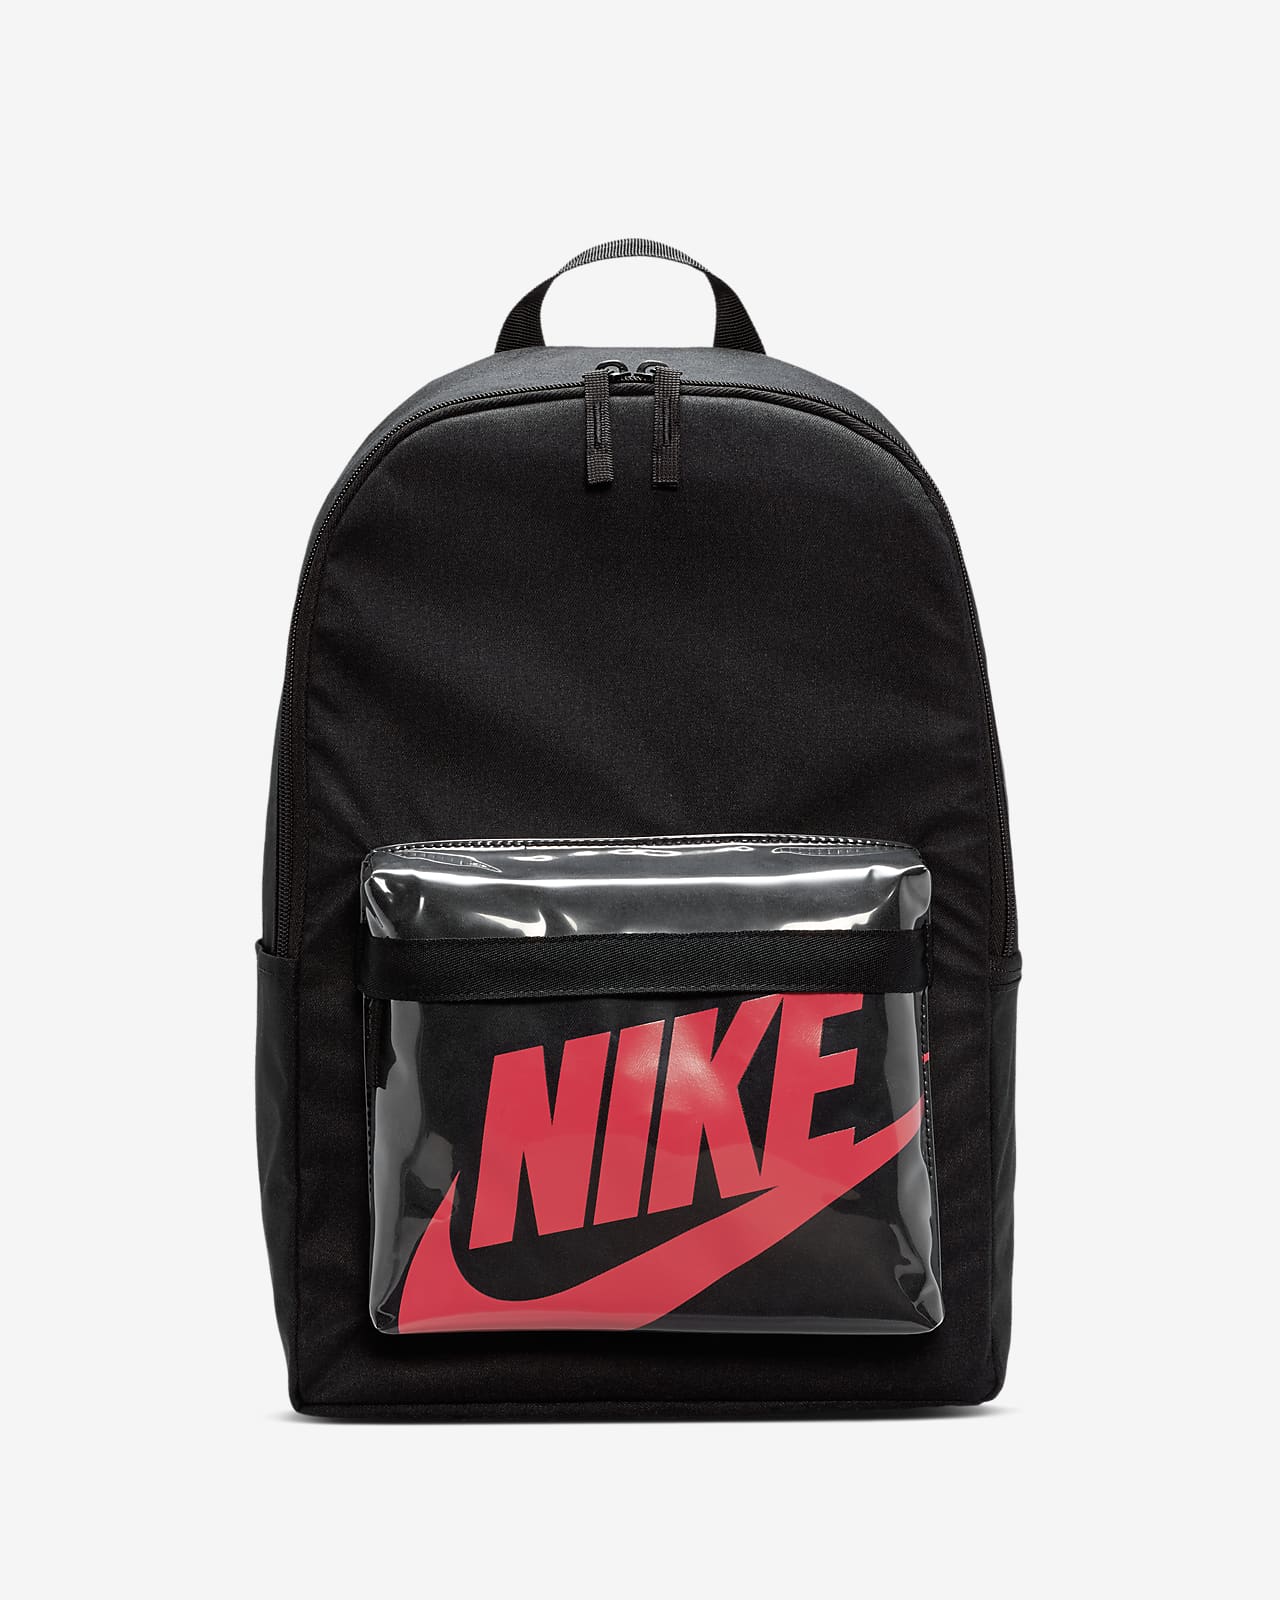 nike heritage 2.0 backpack